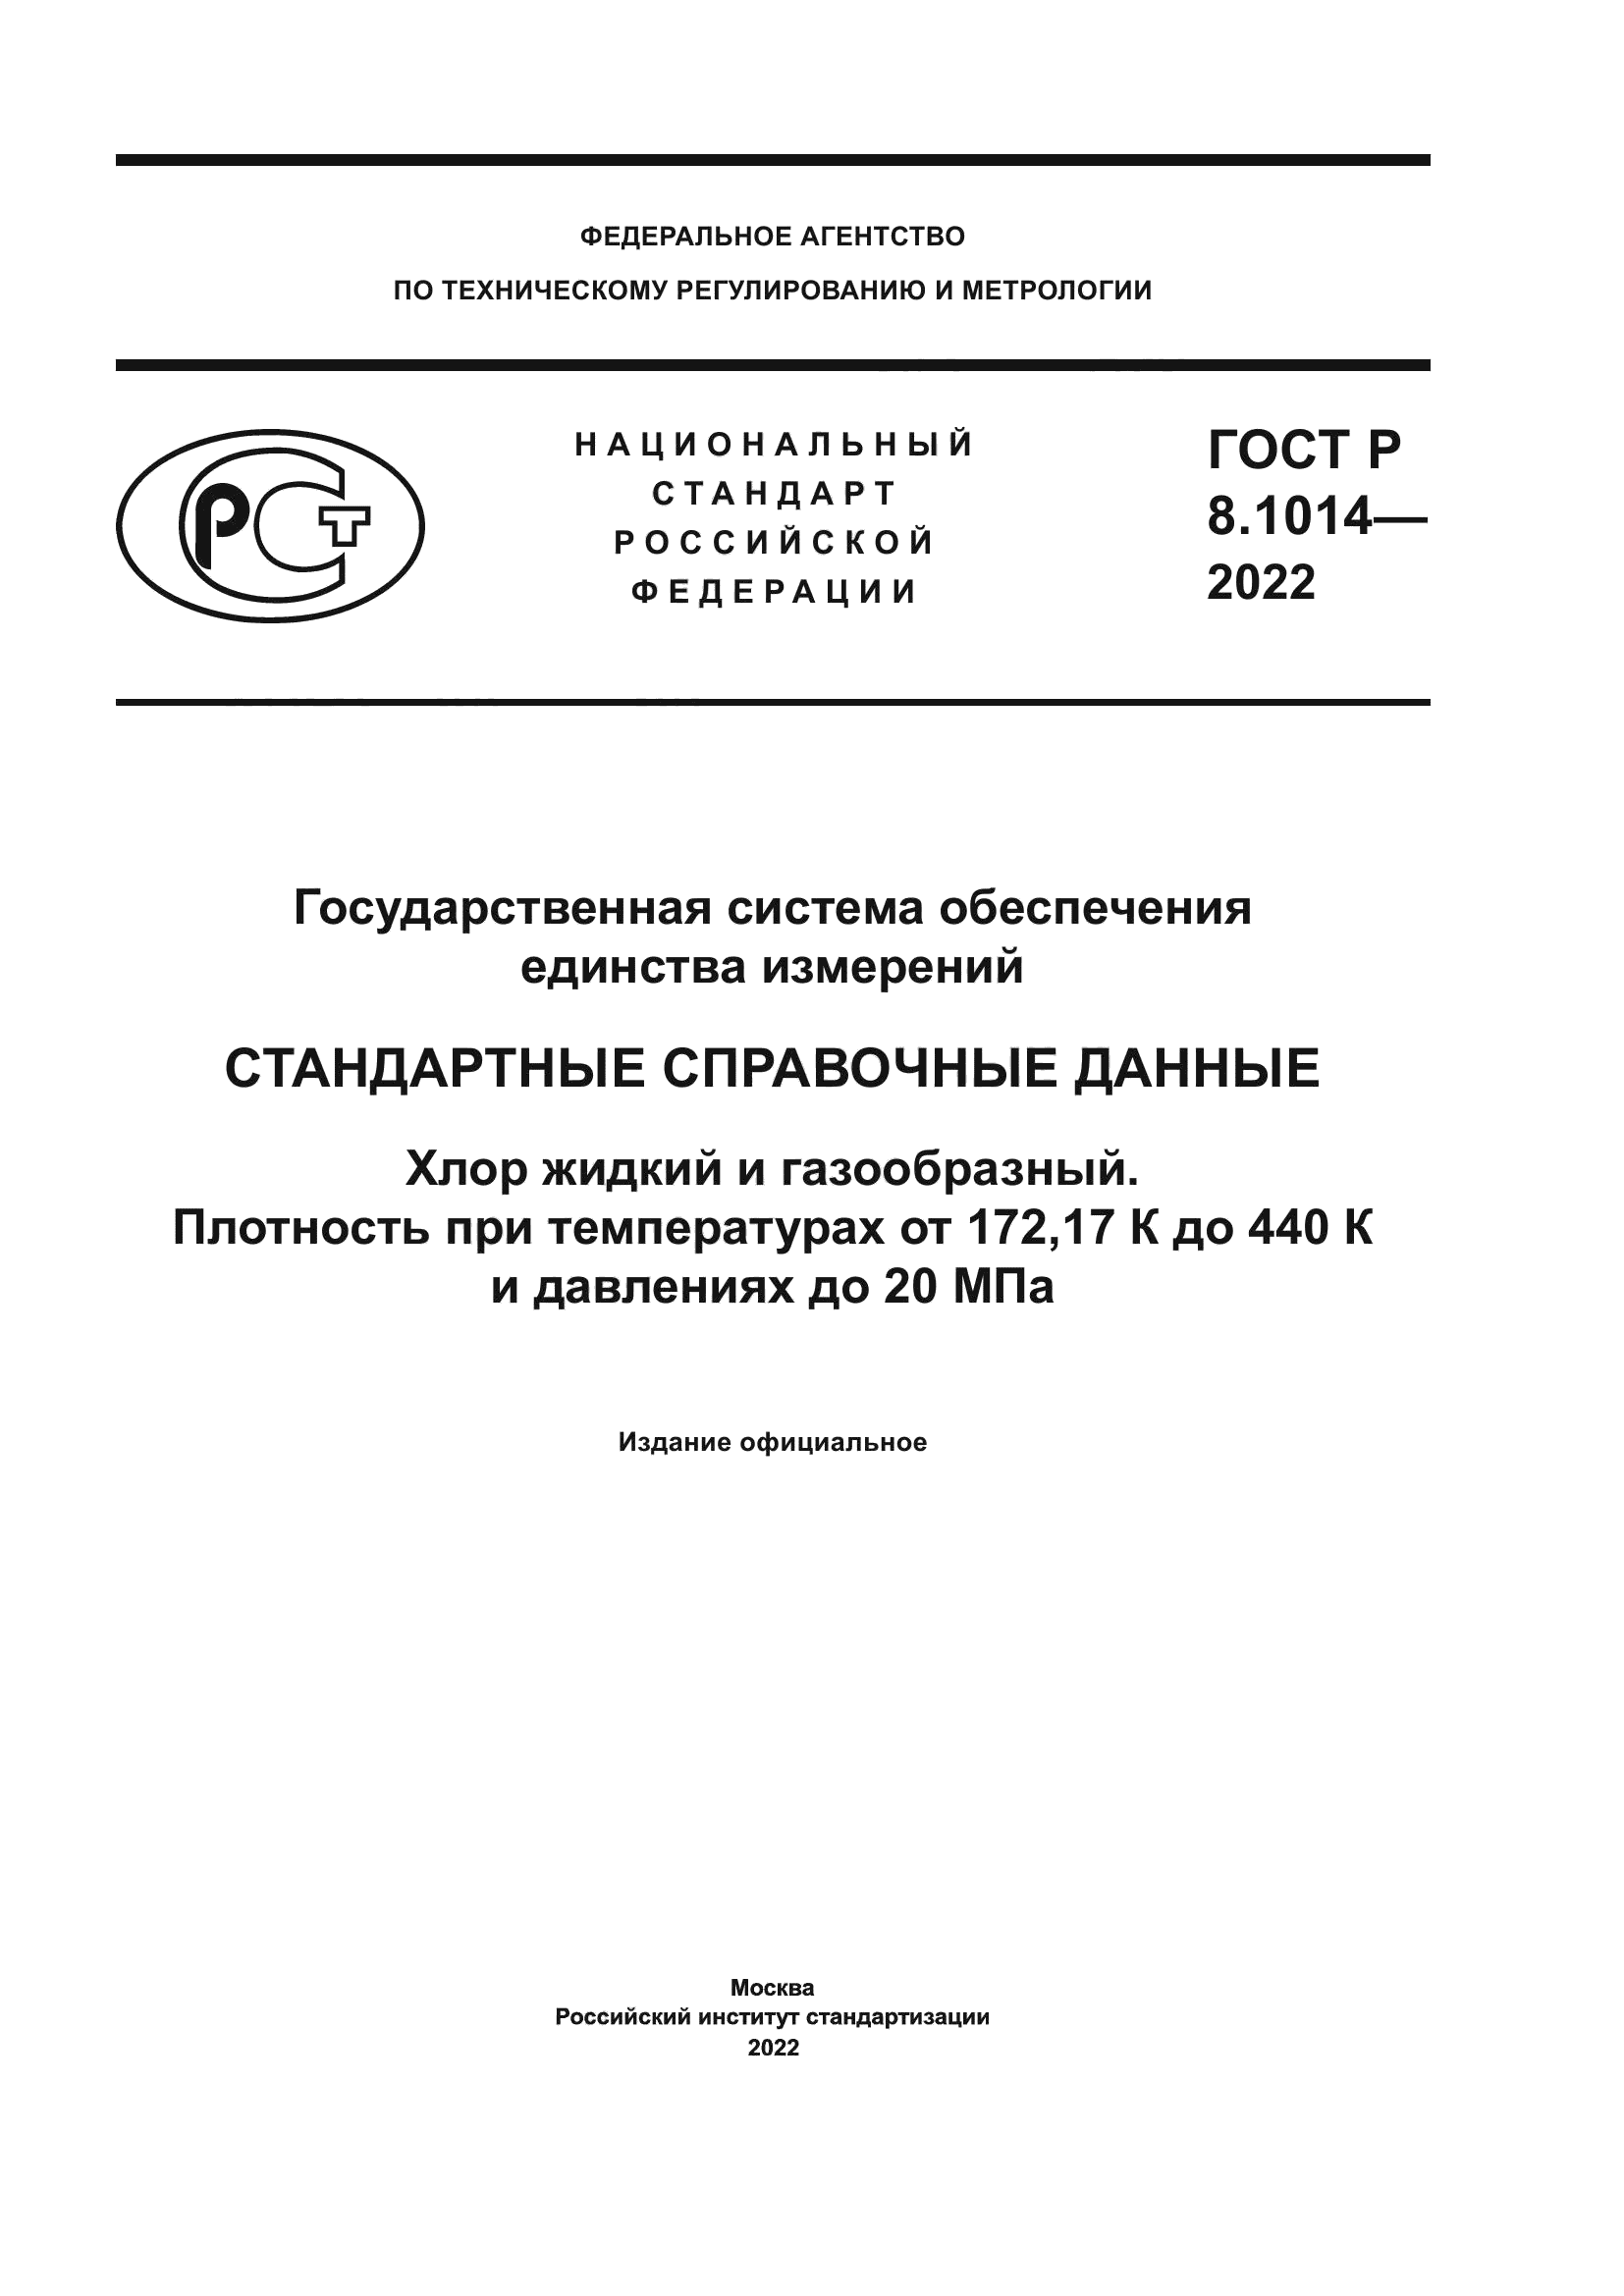 ГОСТ Р 8.1014-2022